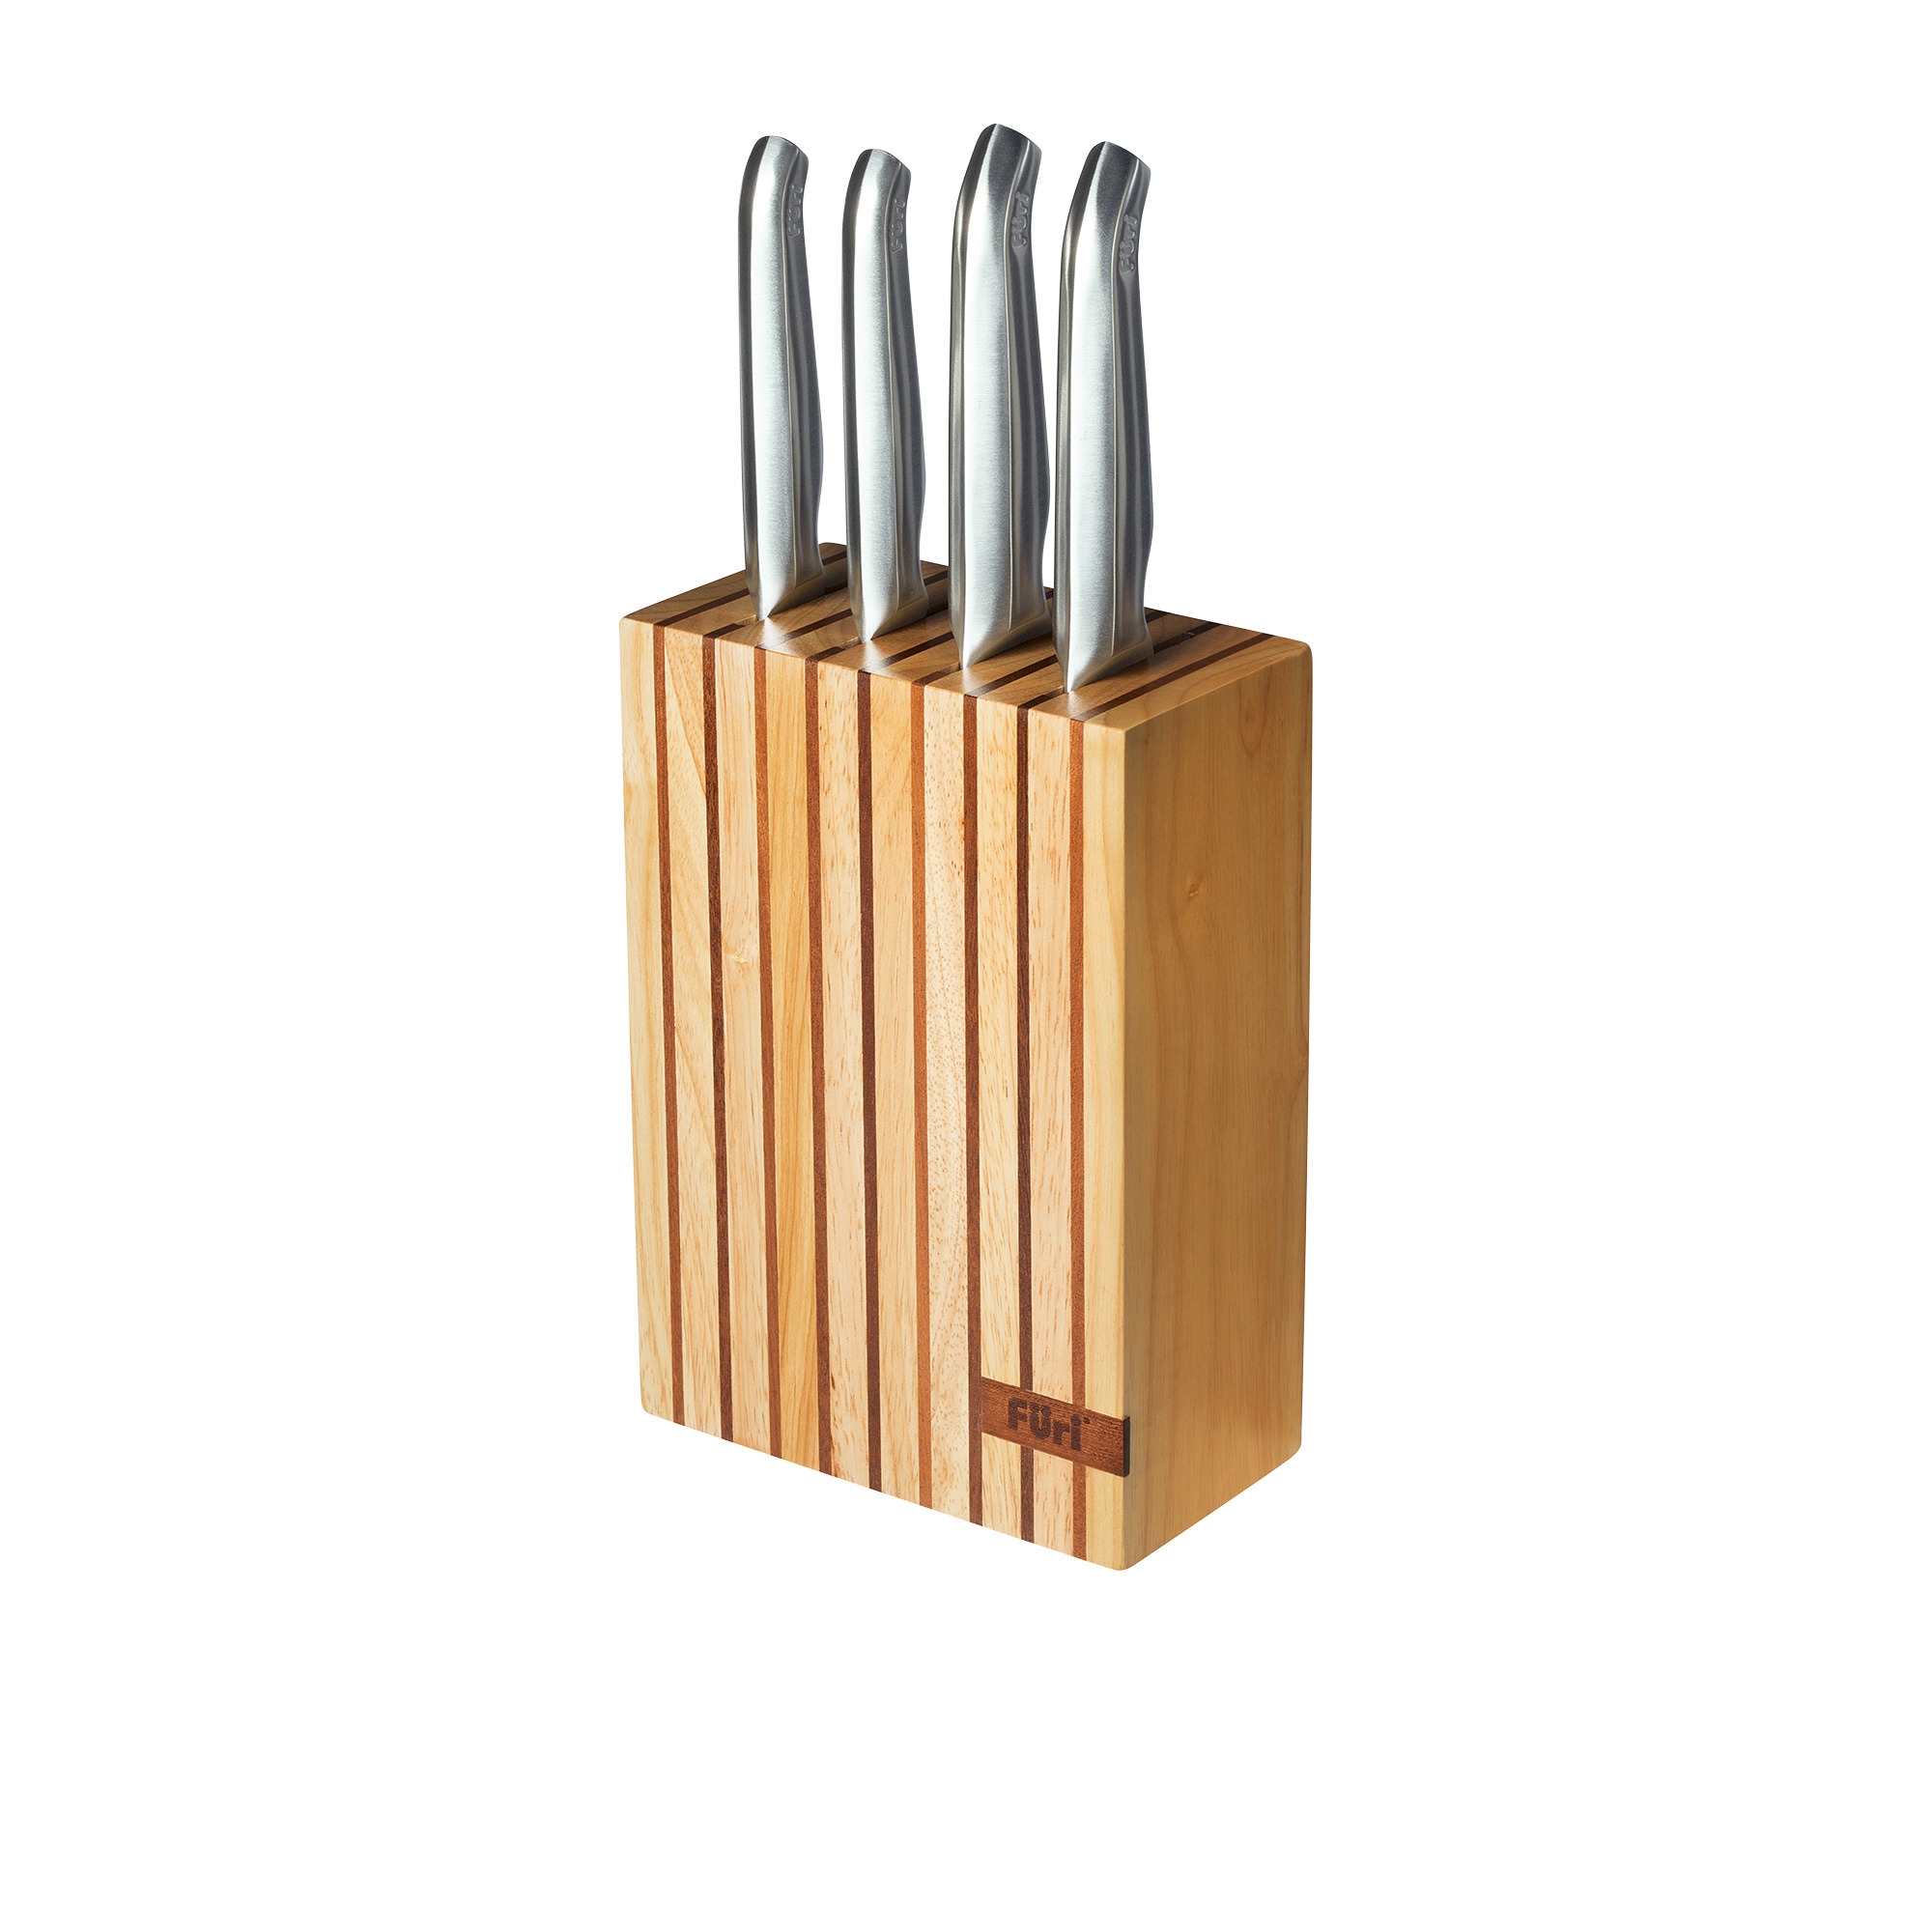 Furi Pro 5pc Wood Knife Block Set Image 1